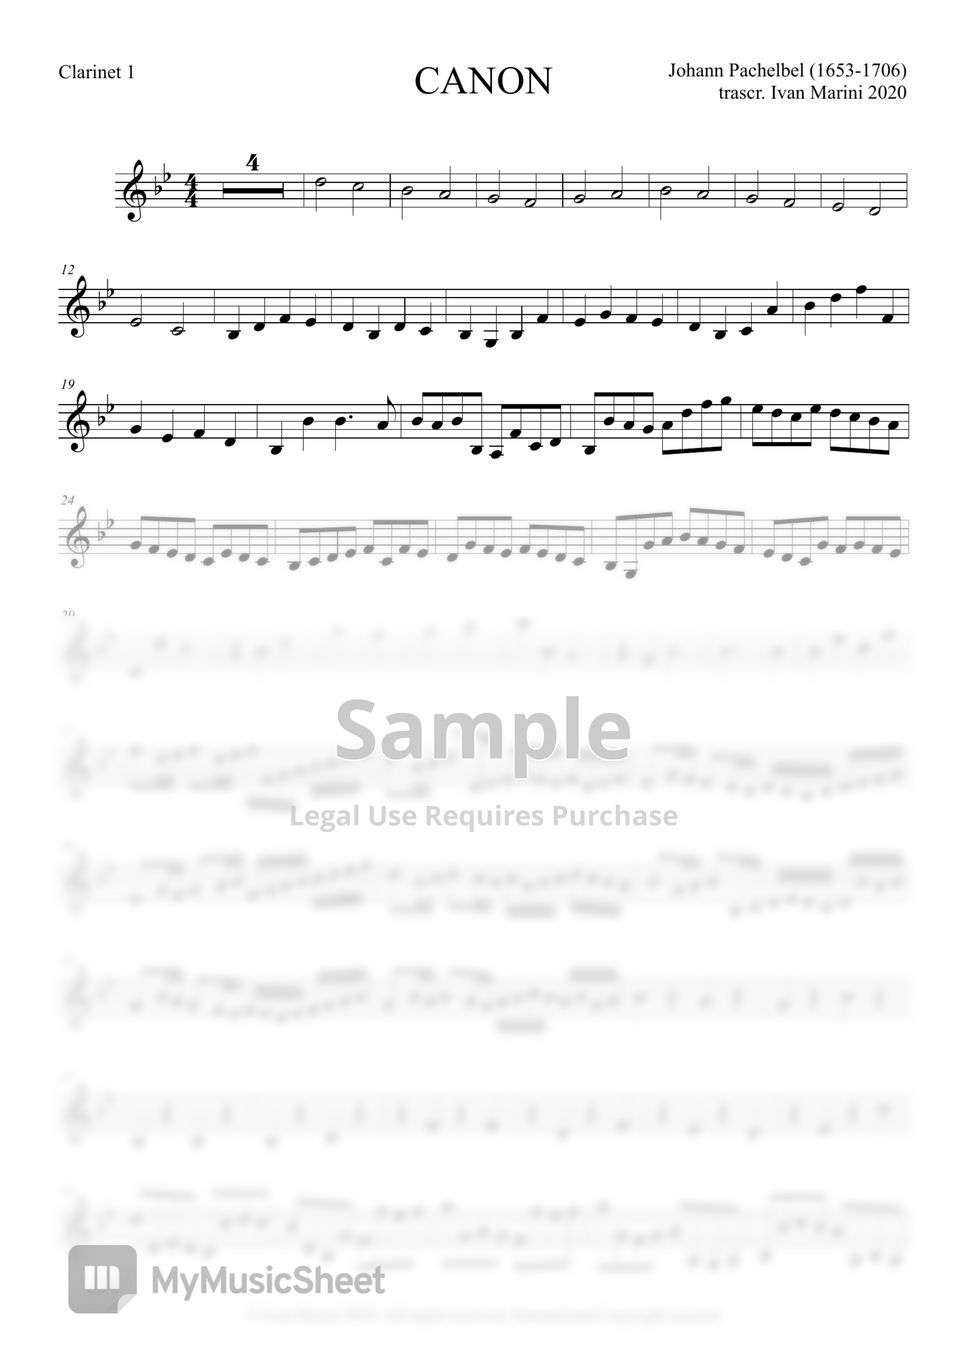 CANON by Pachelbel - Clarinet Quartet by Ivan Marini